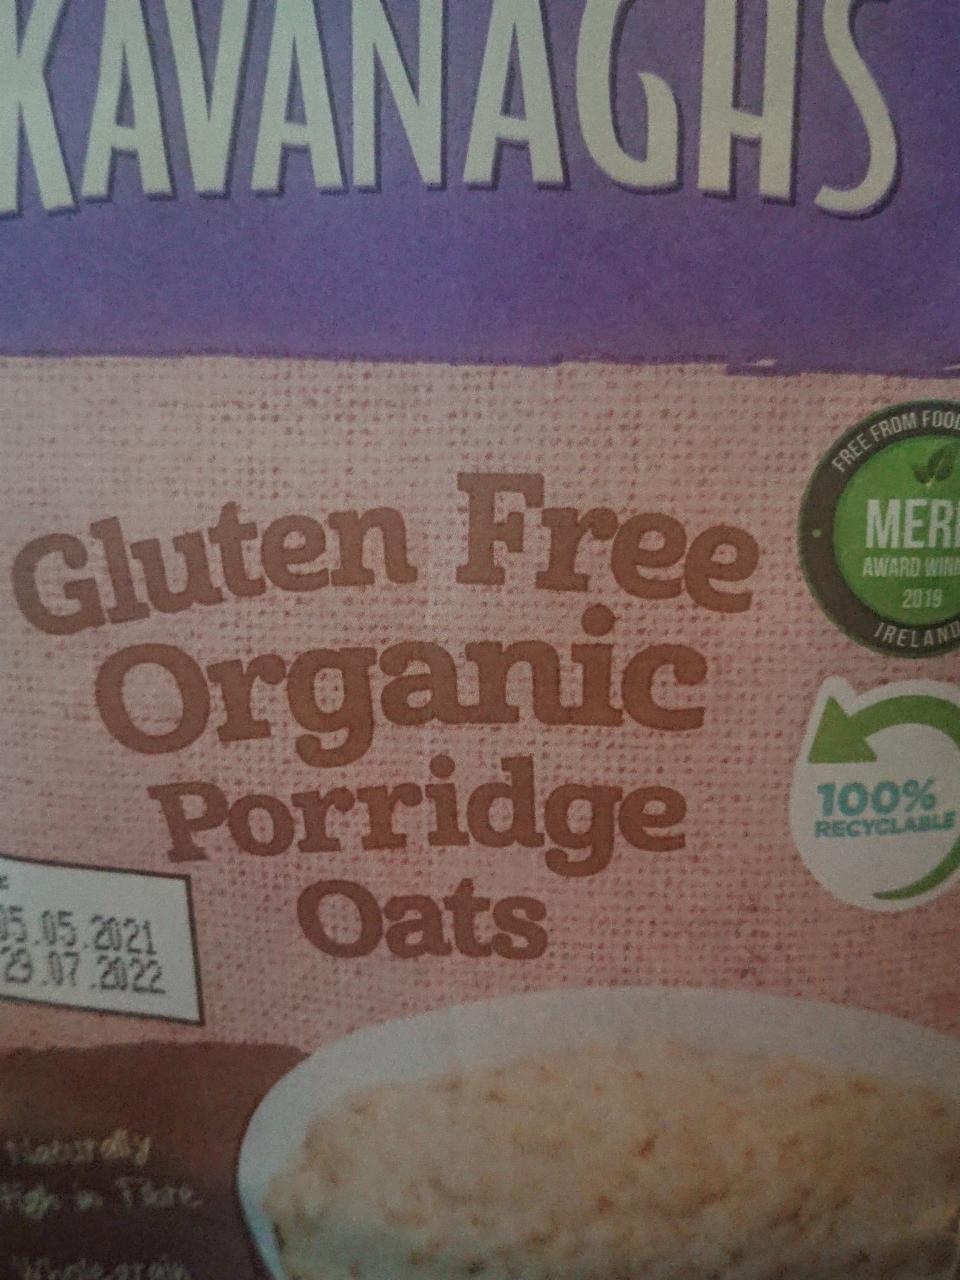 Fotografie - Gluten Free Organic Porridge Oats Kavanagh's